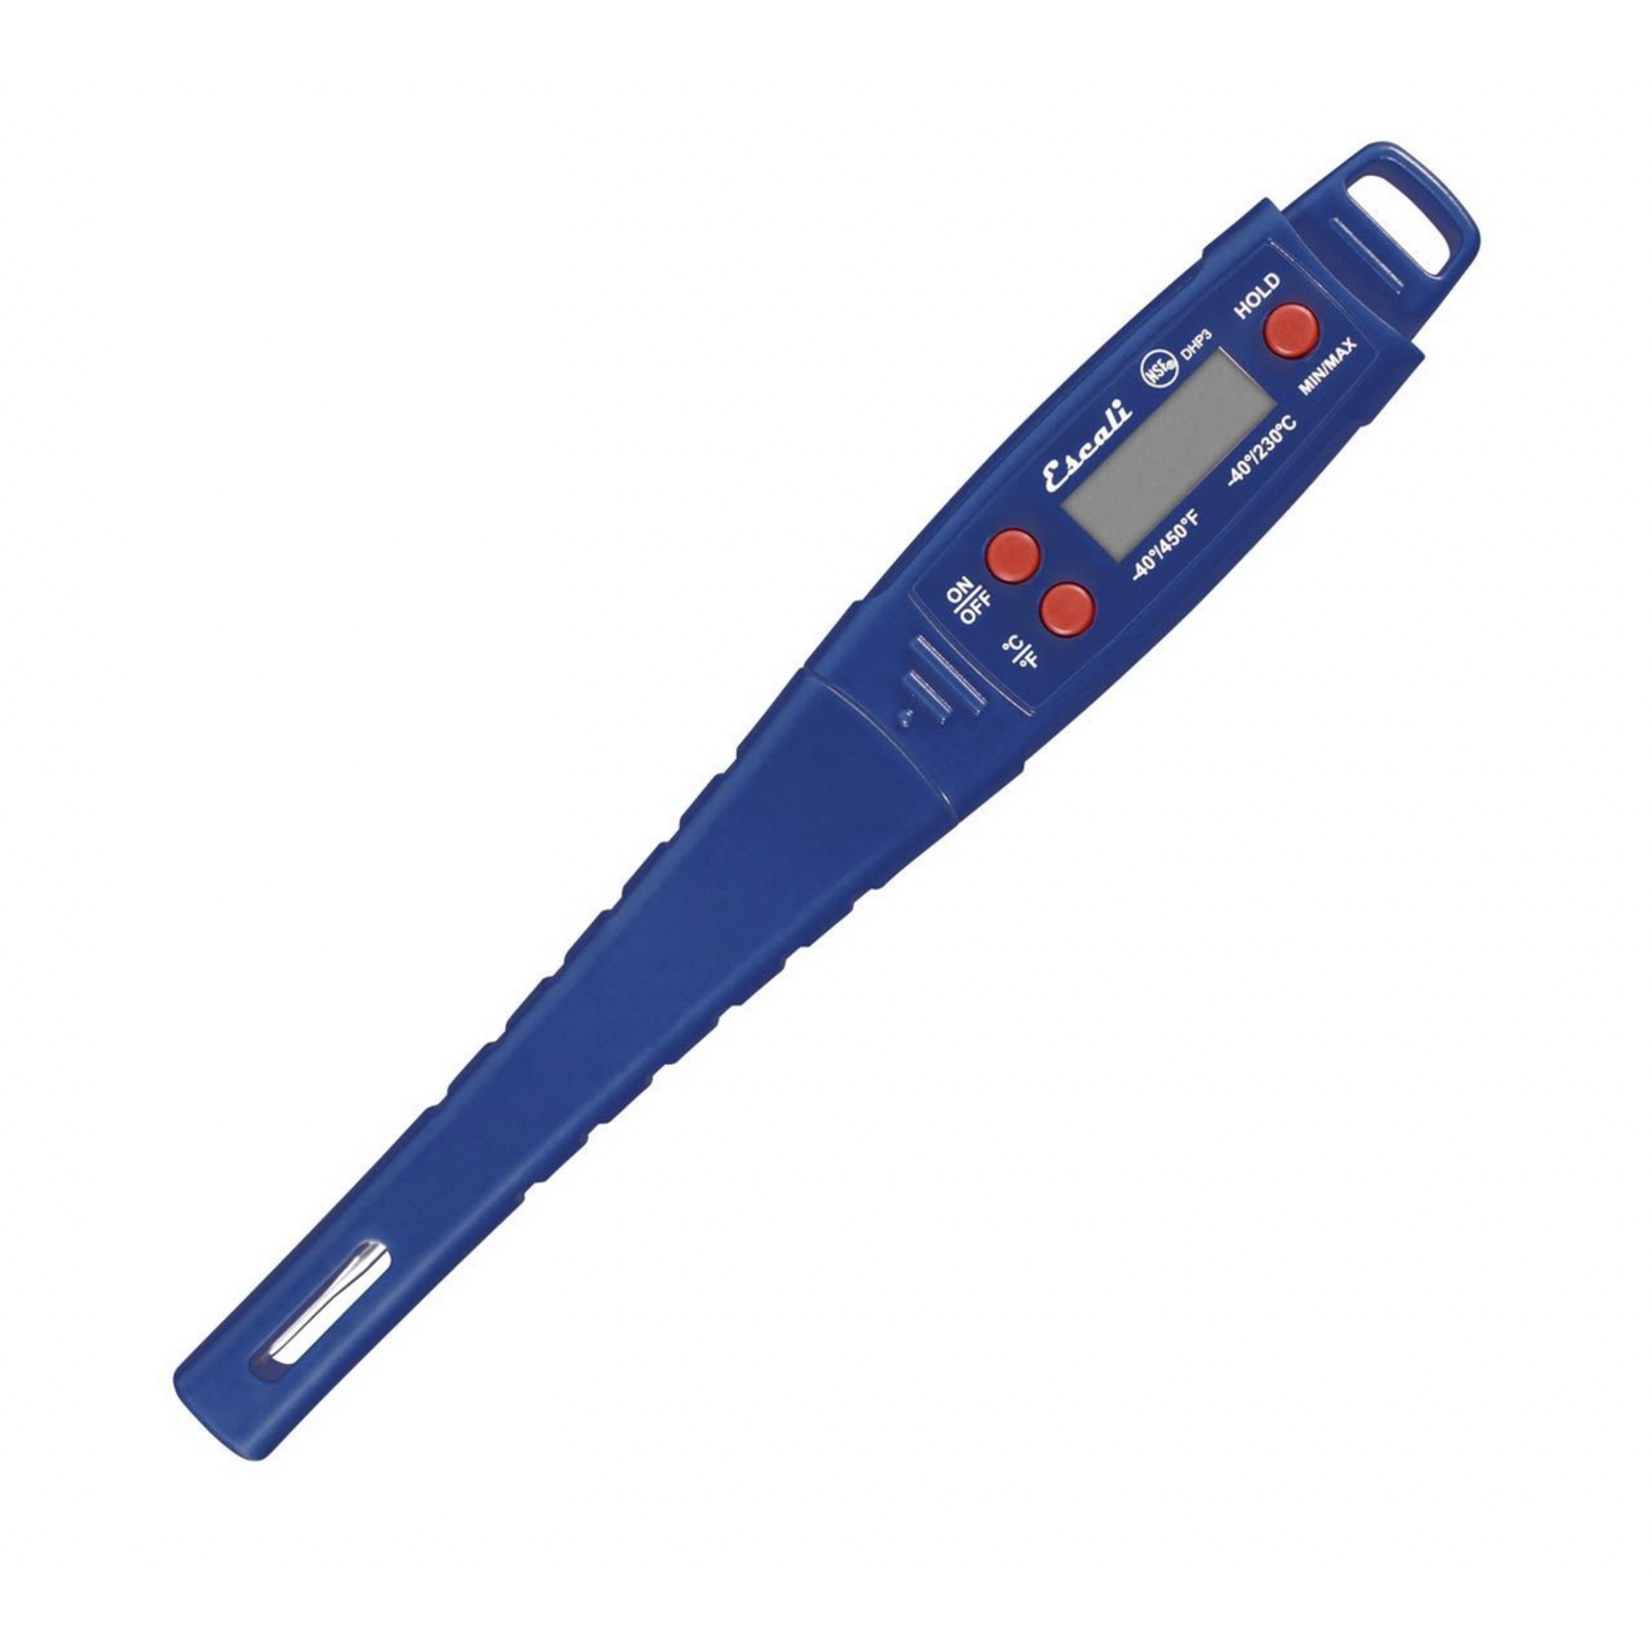 ESCALI ESCALI Blue Waterproof Digital Thermometer